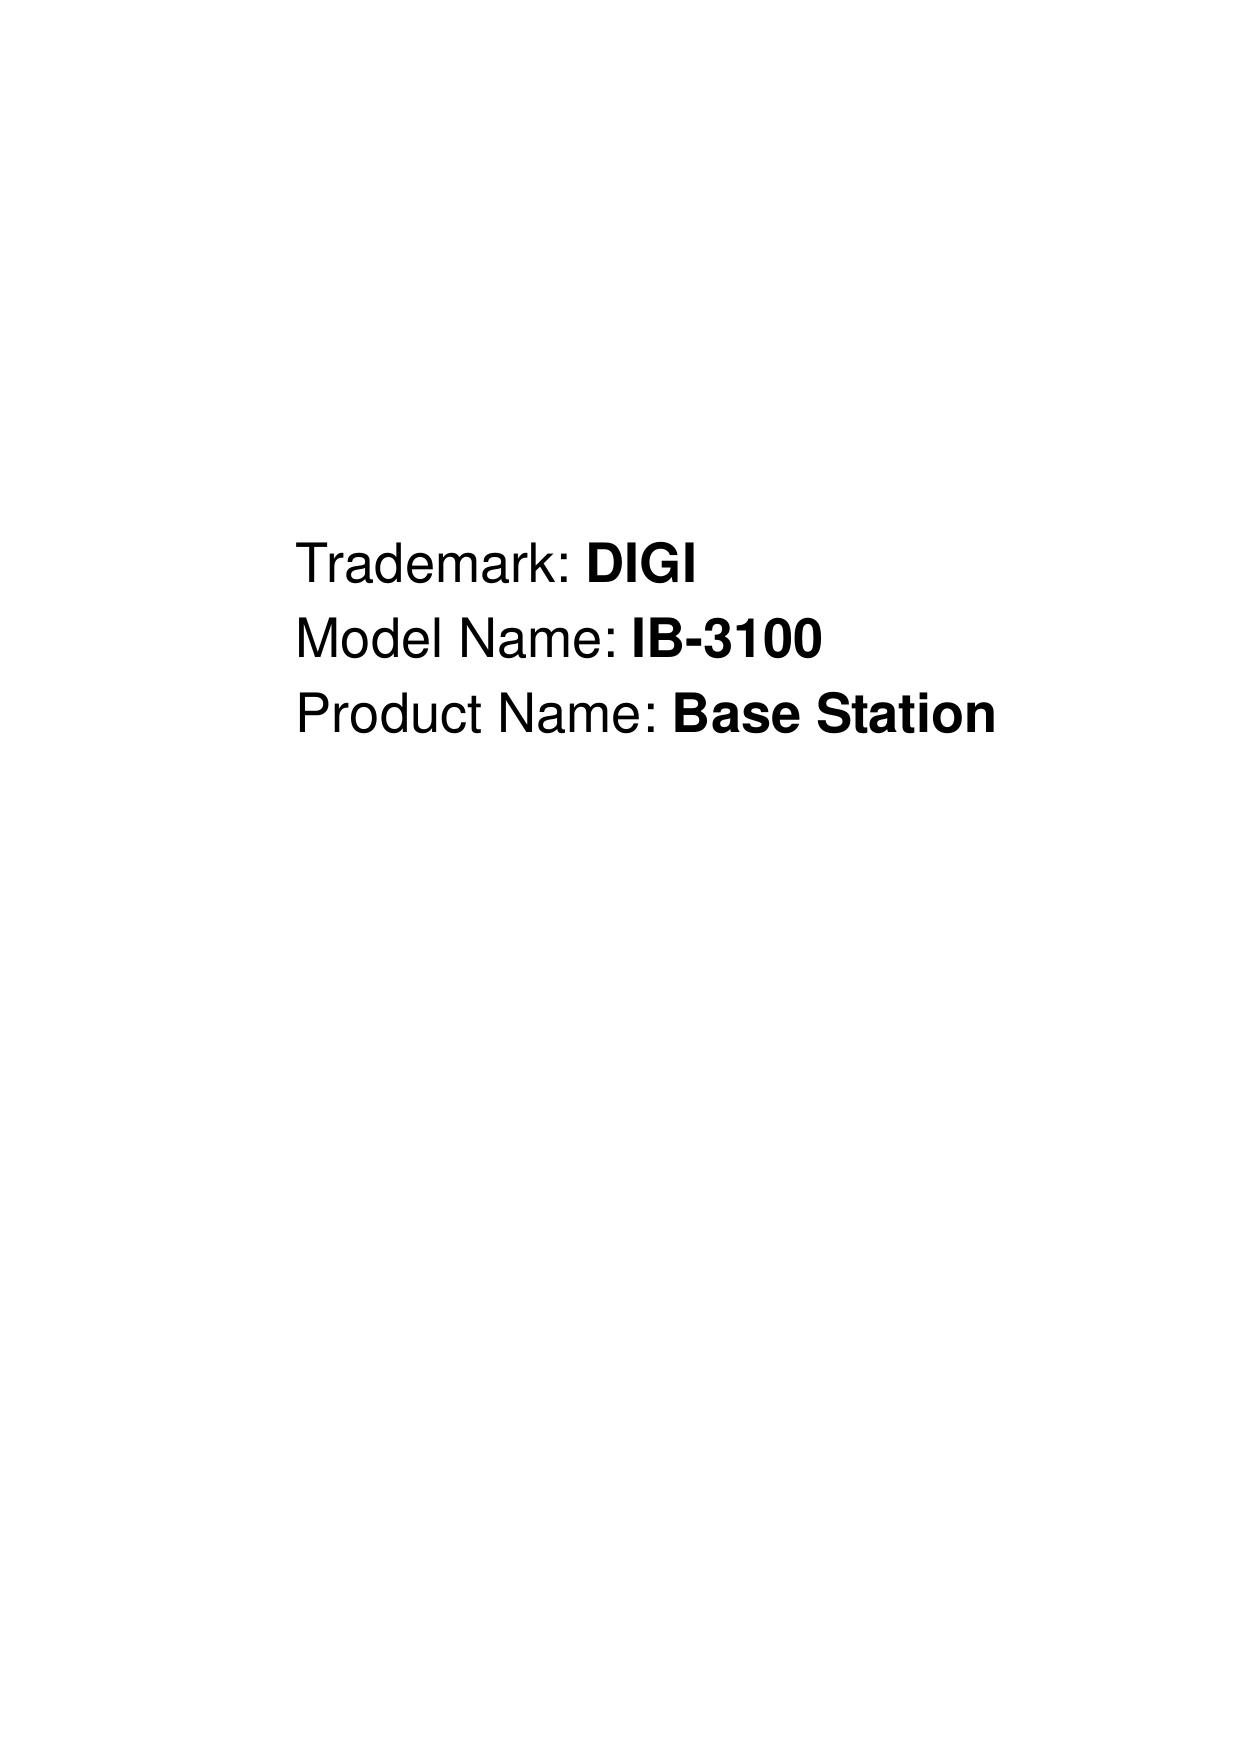      Trademark: DIGI Model Name: IB-3100 Product Name: Base Station  